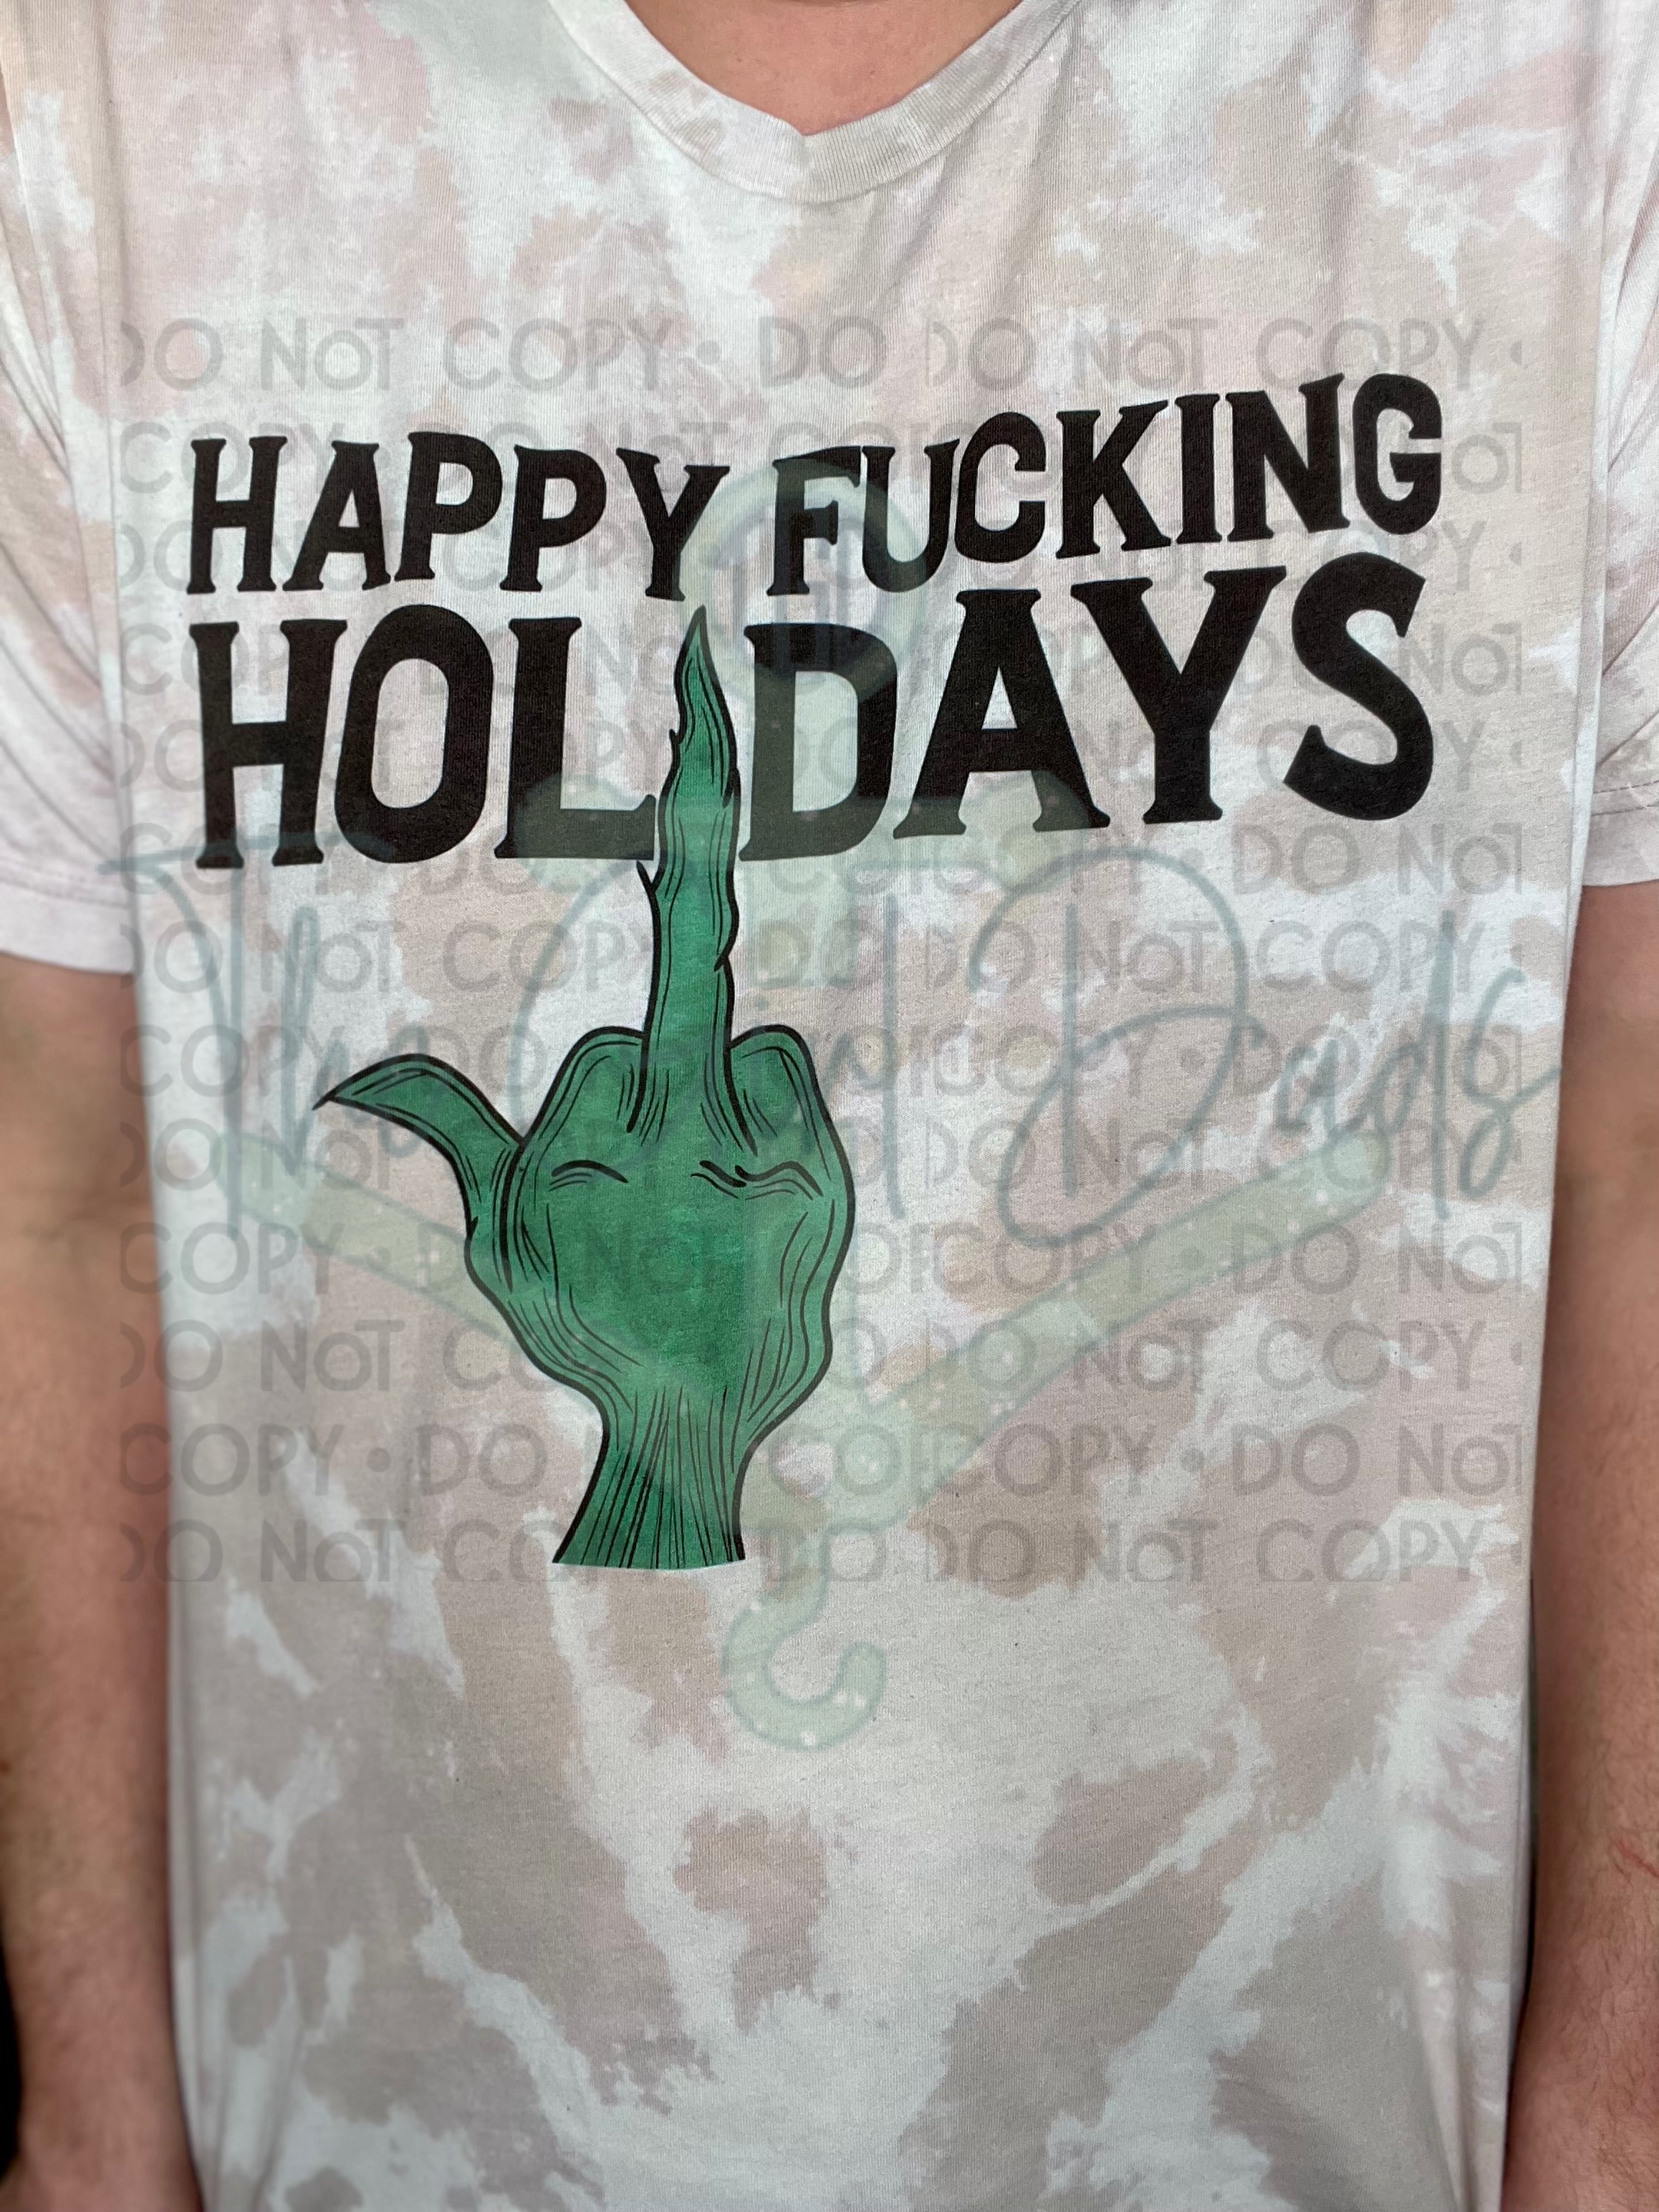 Happy Fucking Holidays Top Design